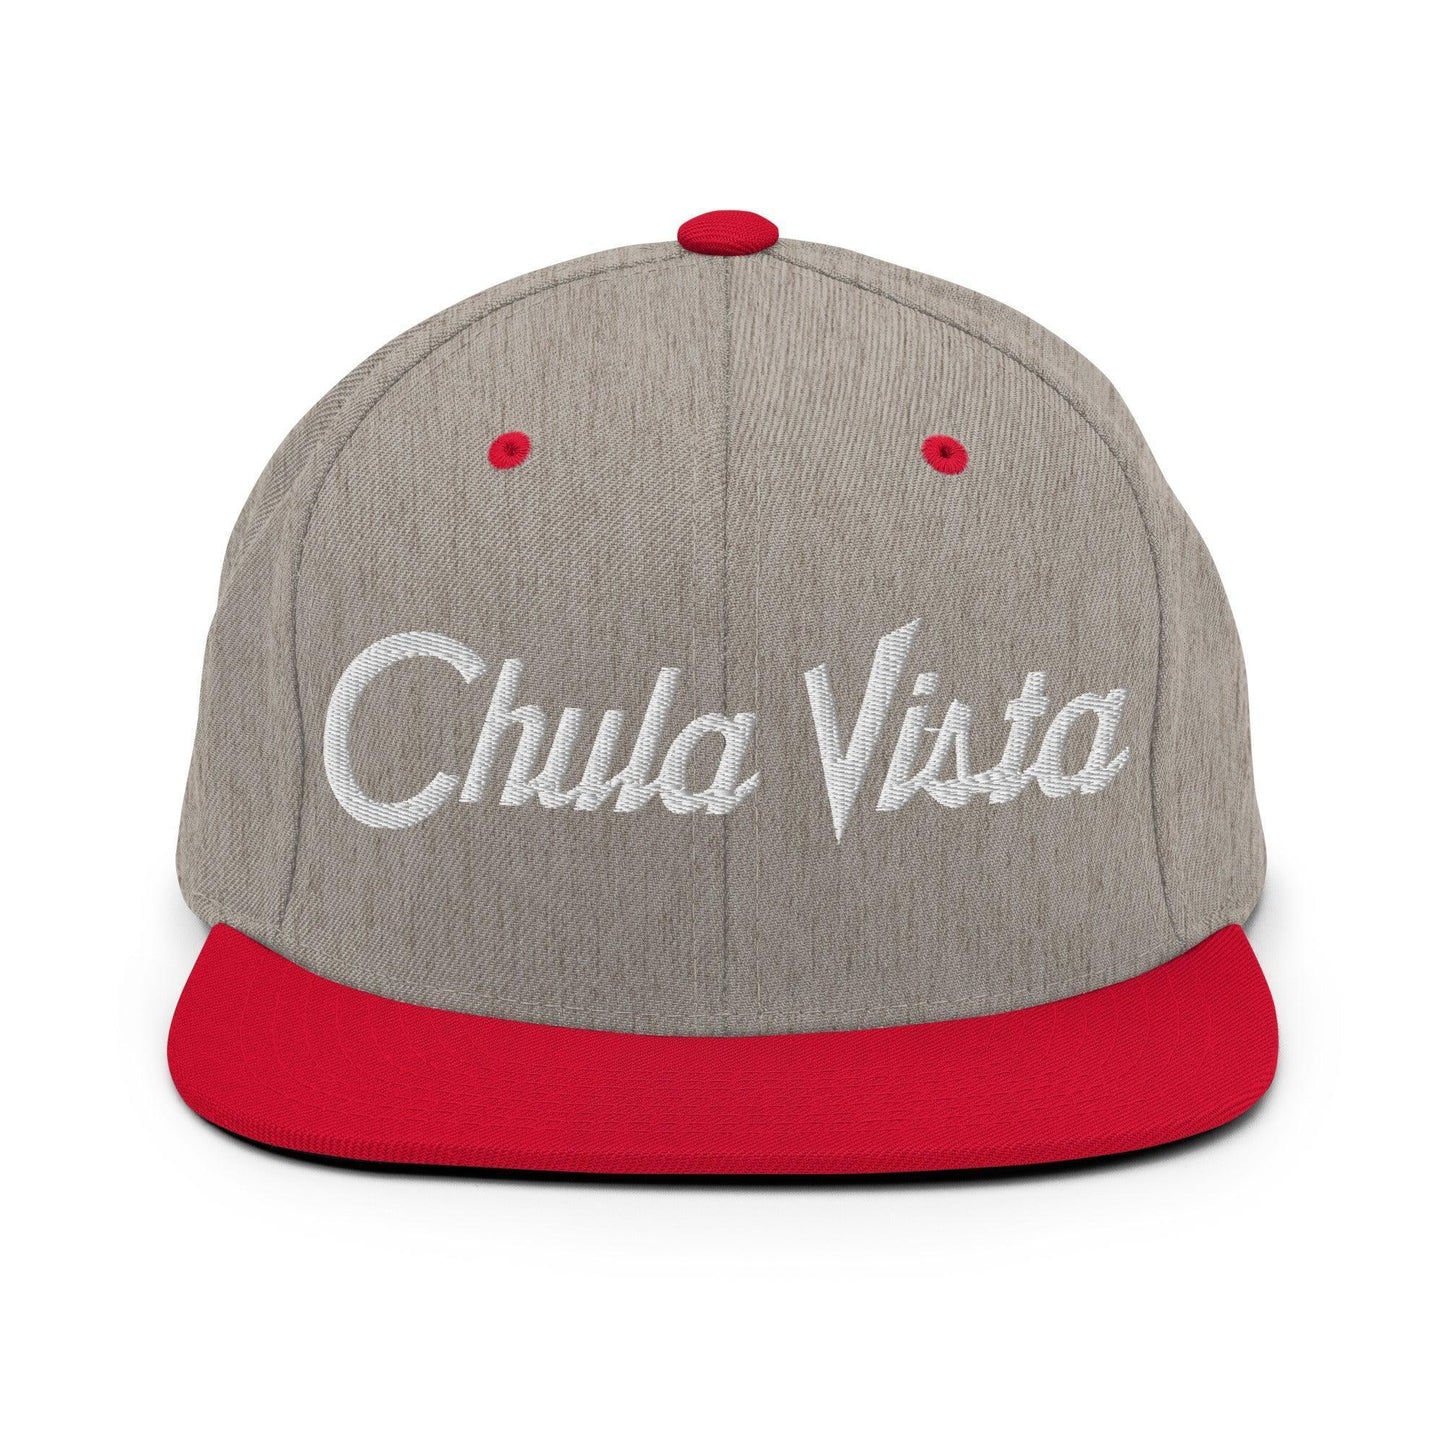 Chula Vista Script Snapback Hat Heather Grey/ Red